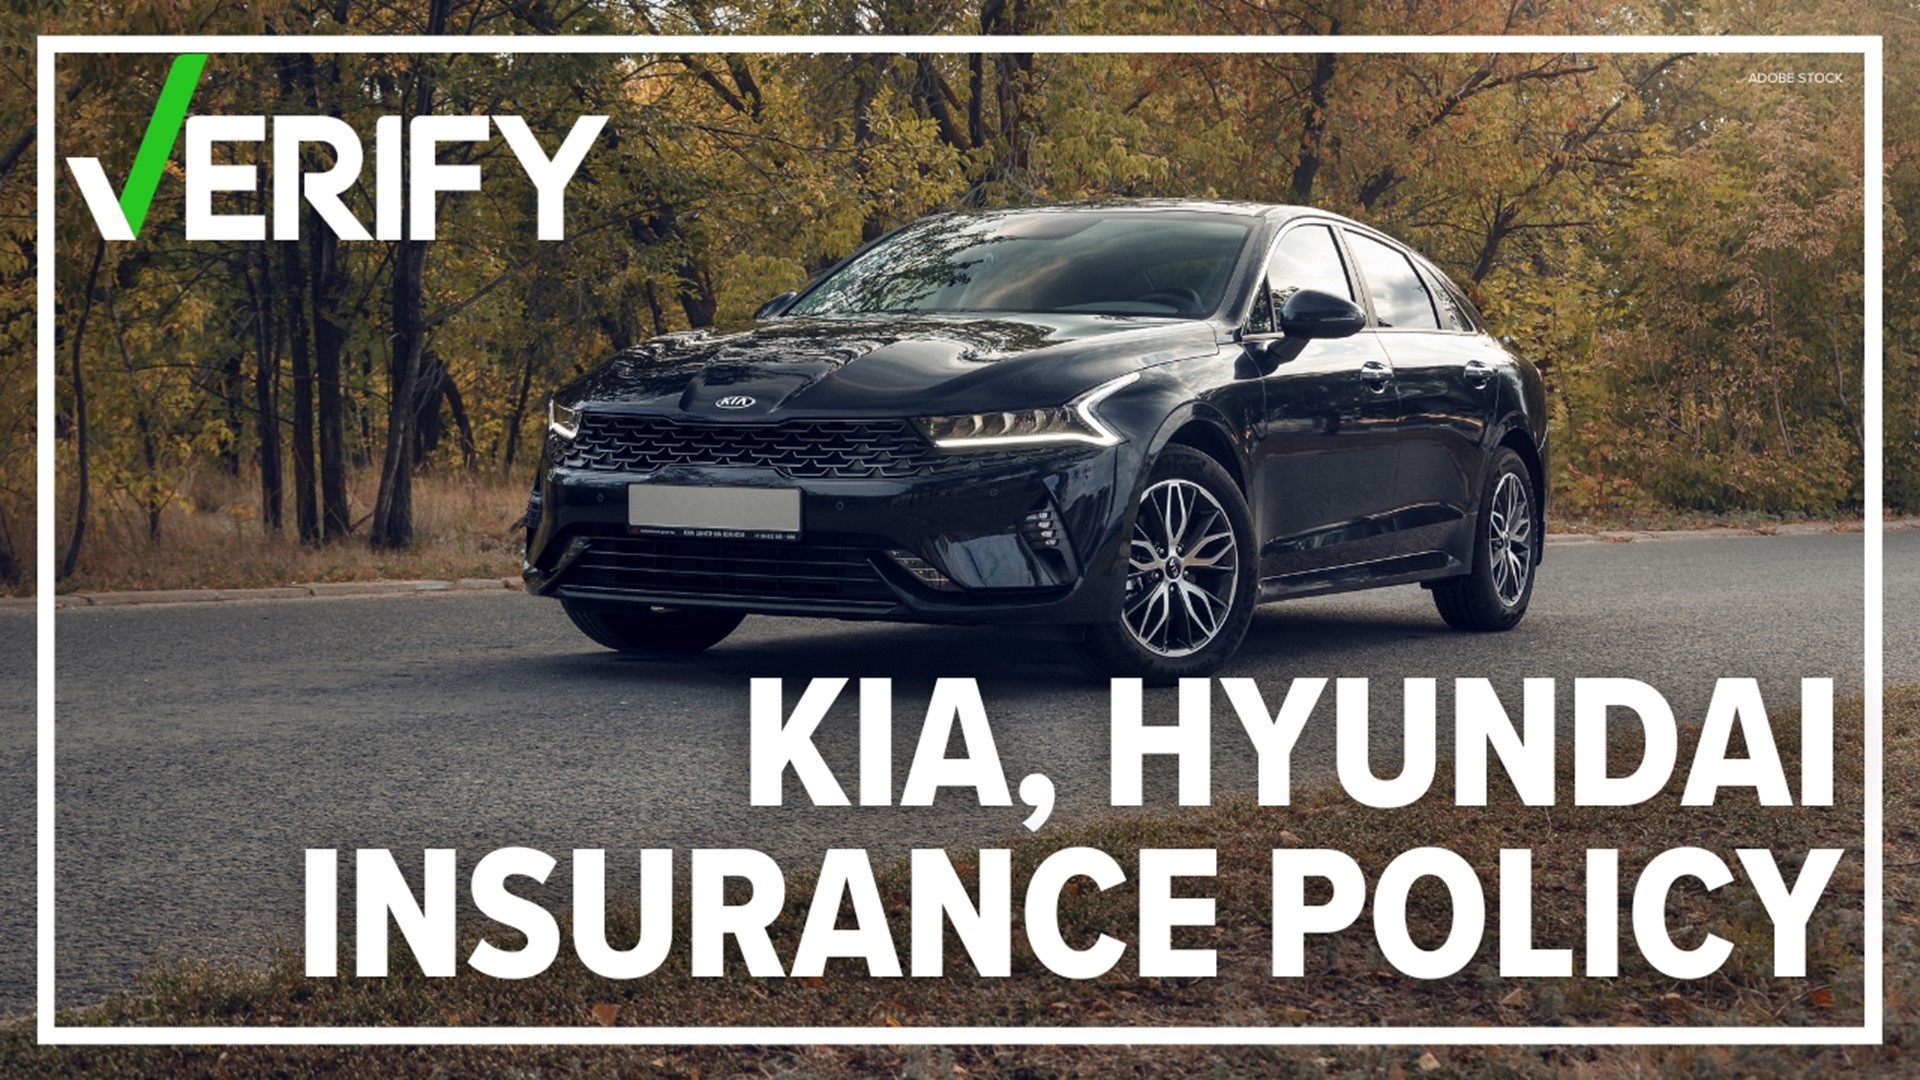 Are insurers dropping coverage for some Kias and Hyundais? VERIFY